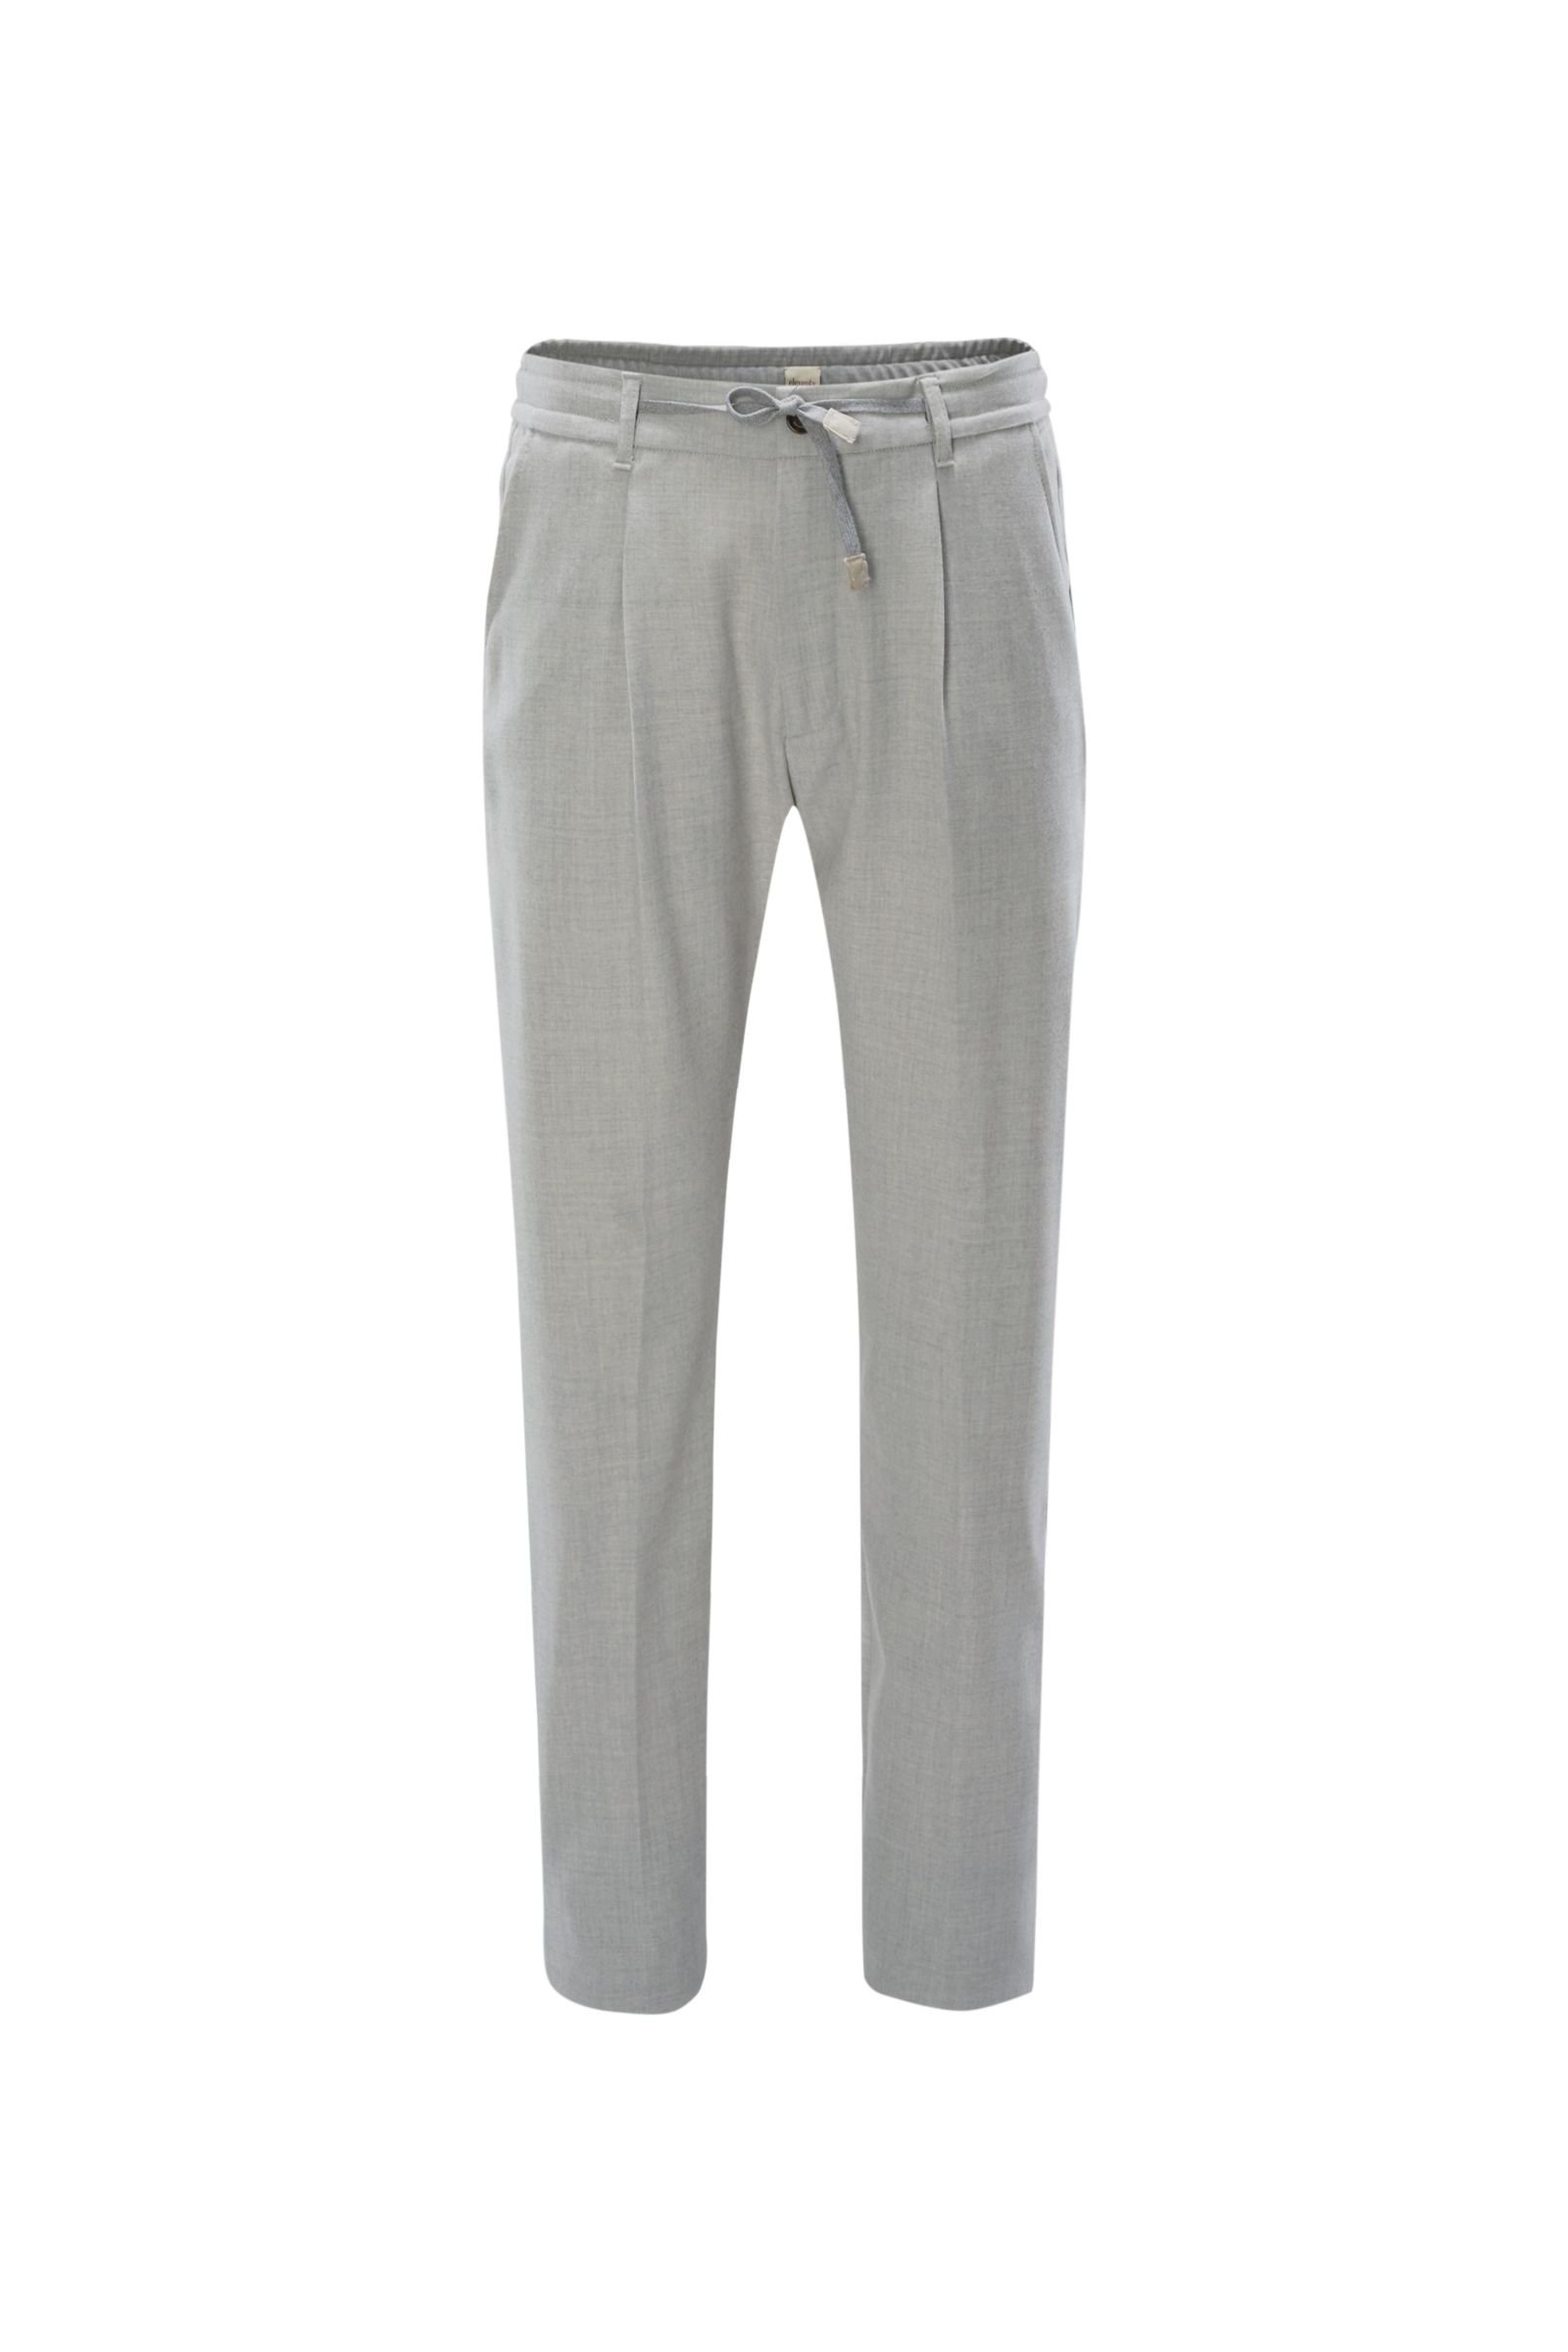 Wool jogger pants light grey